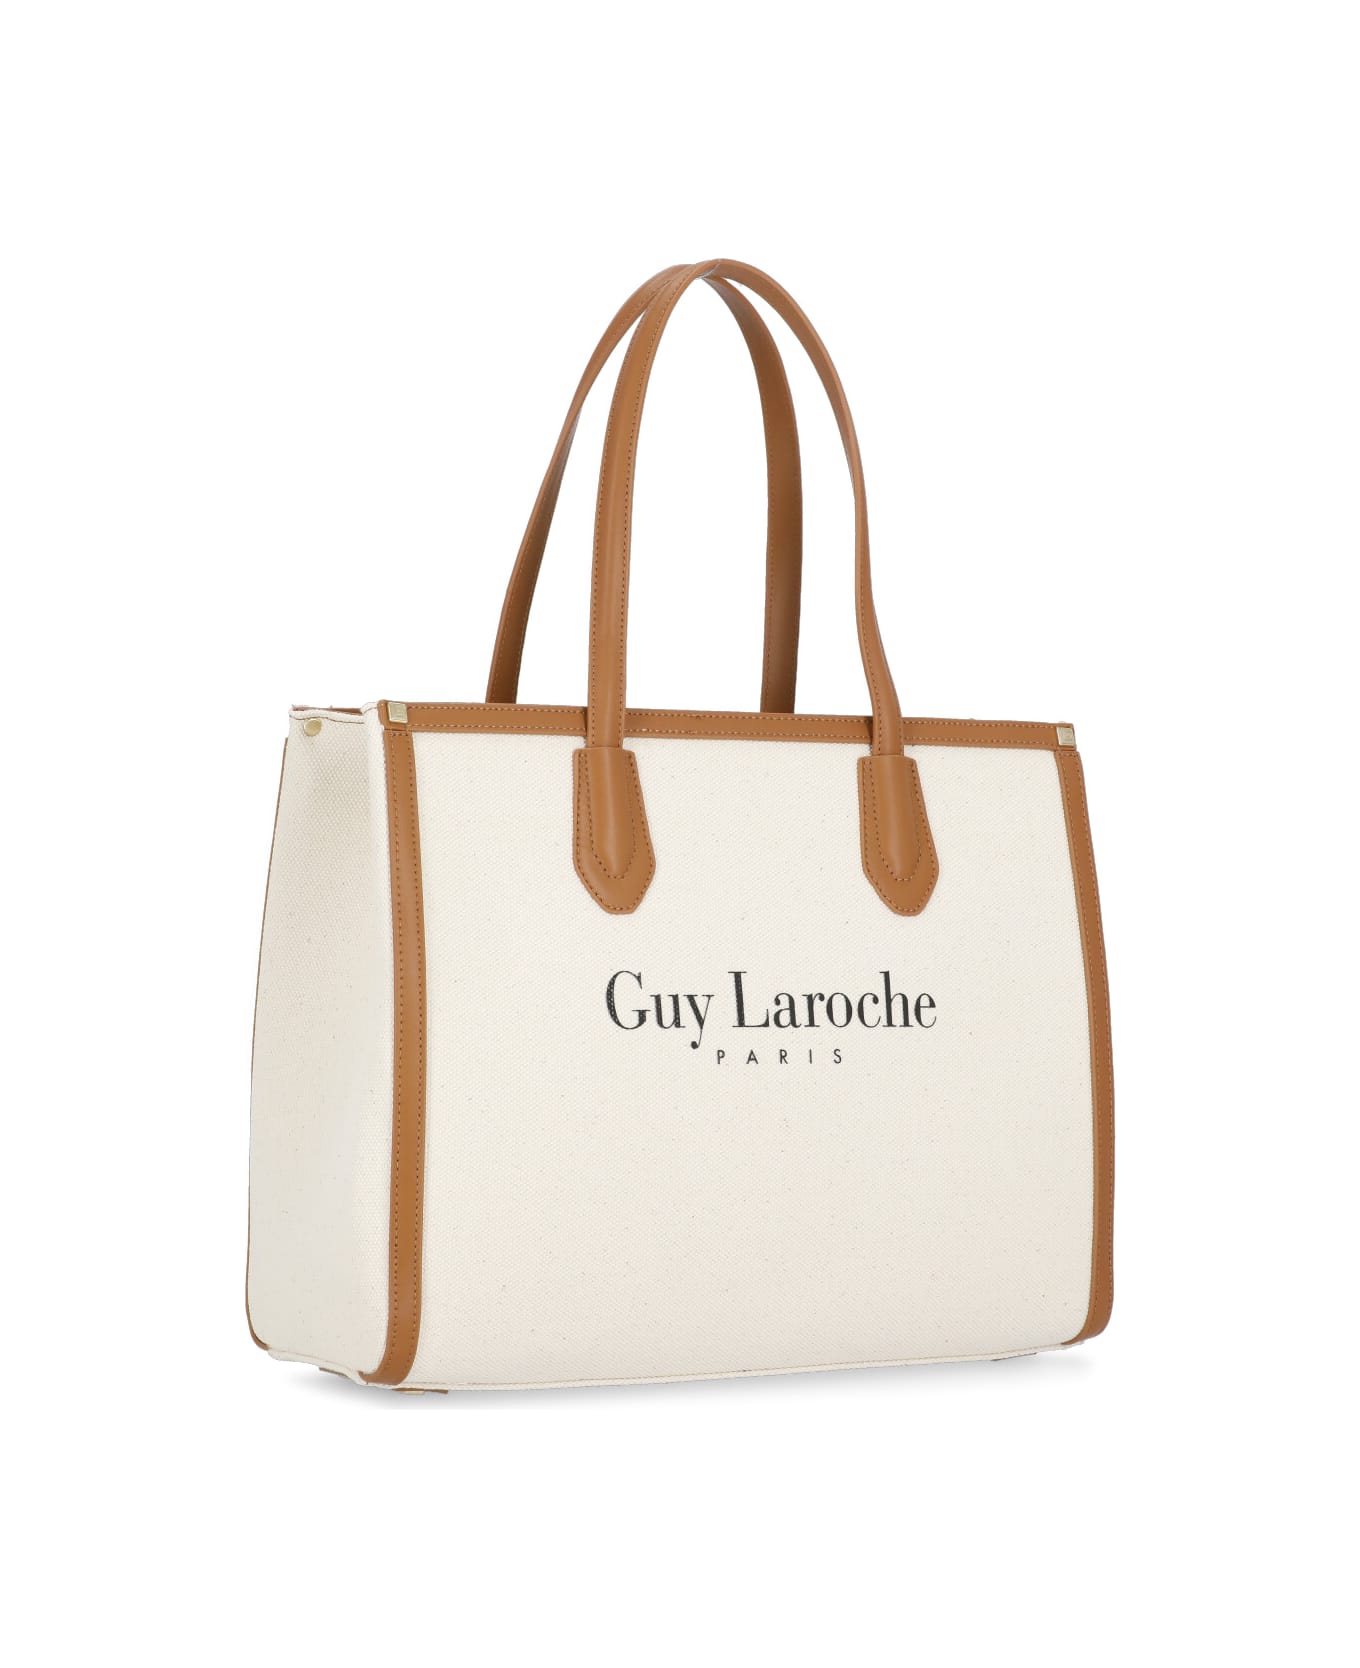 Guy Laroche Tote Bag With Logo | italist